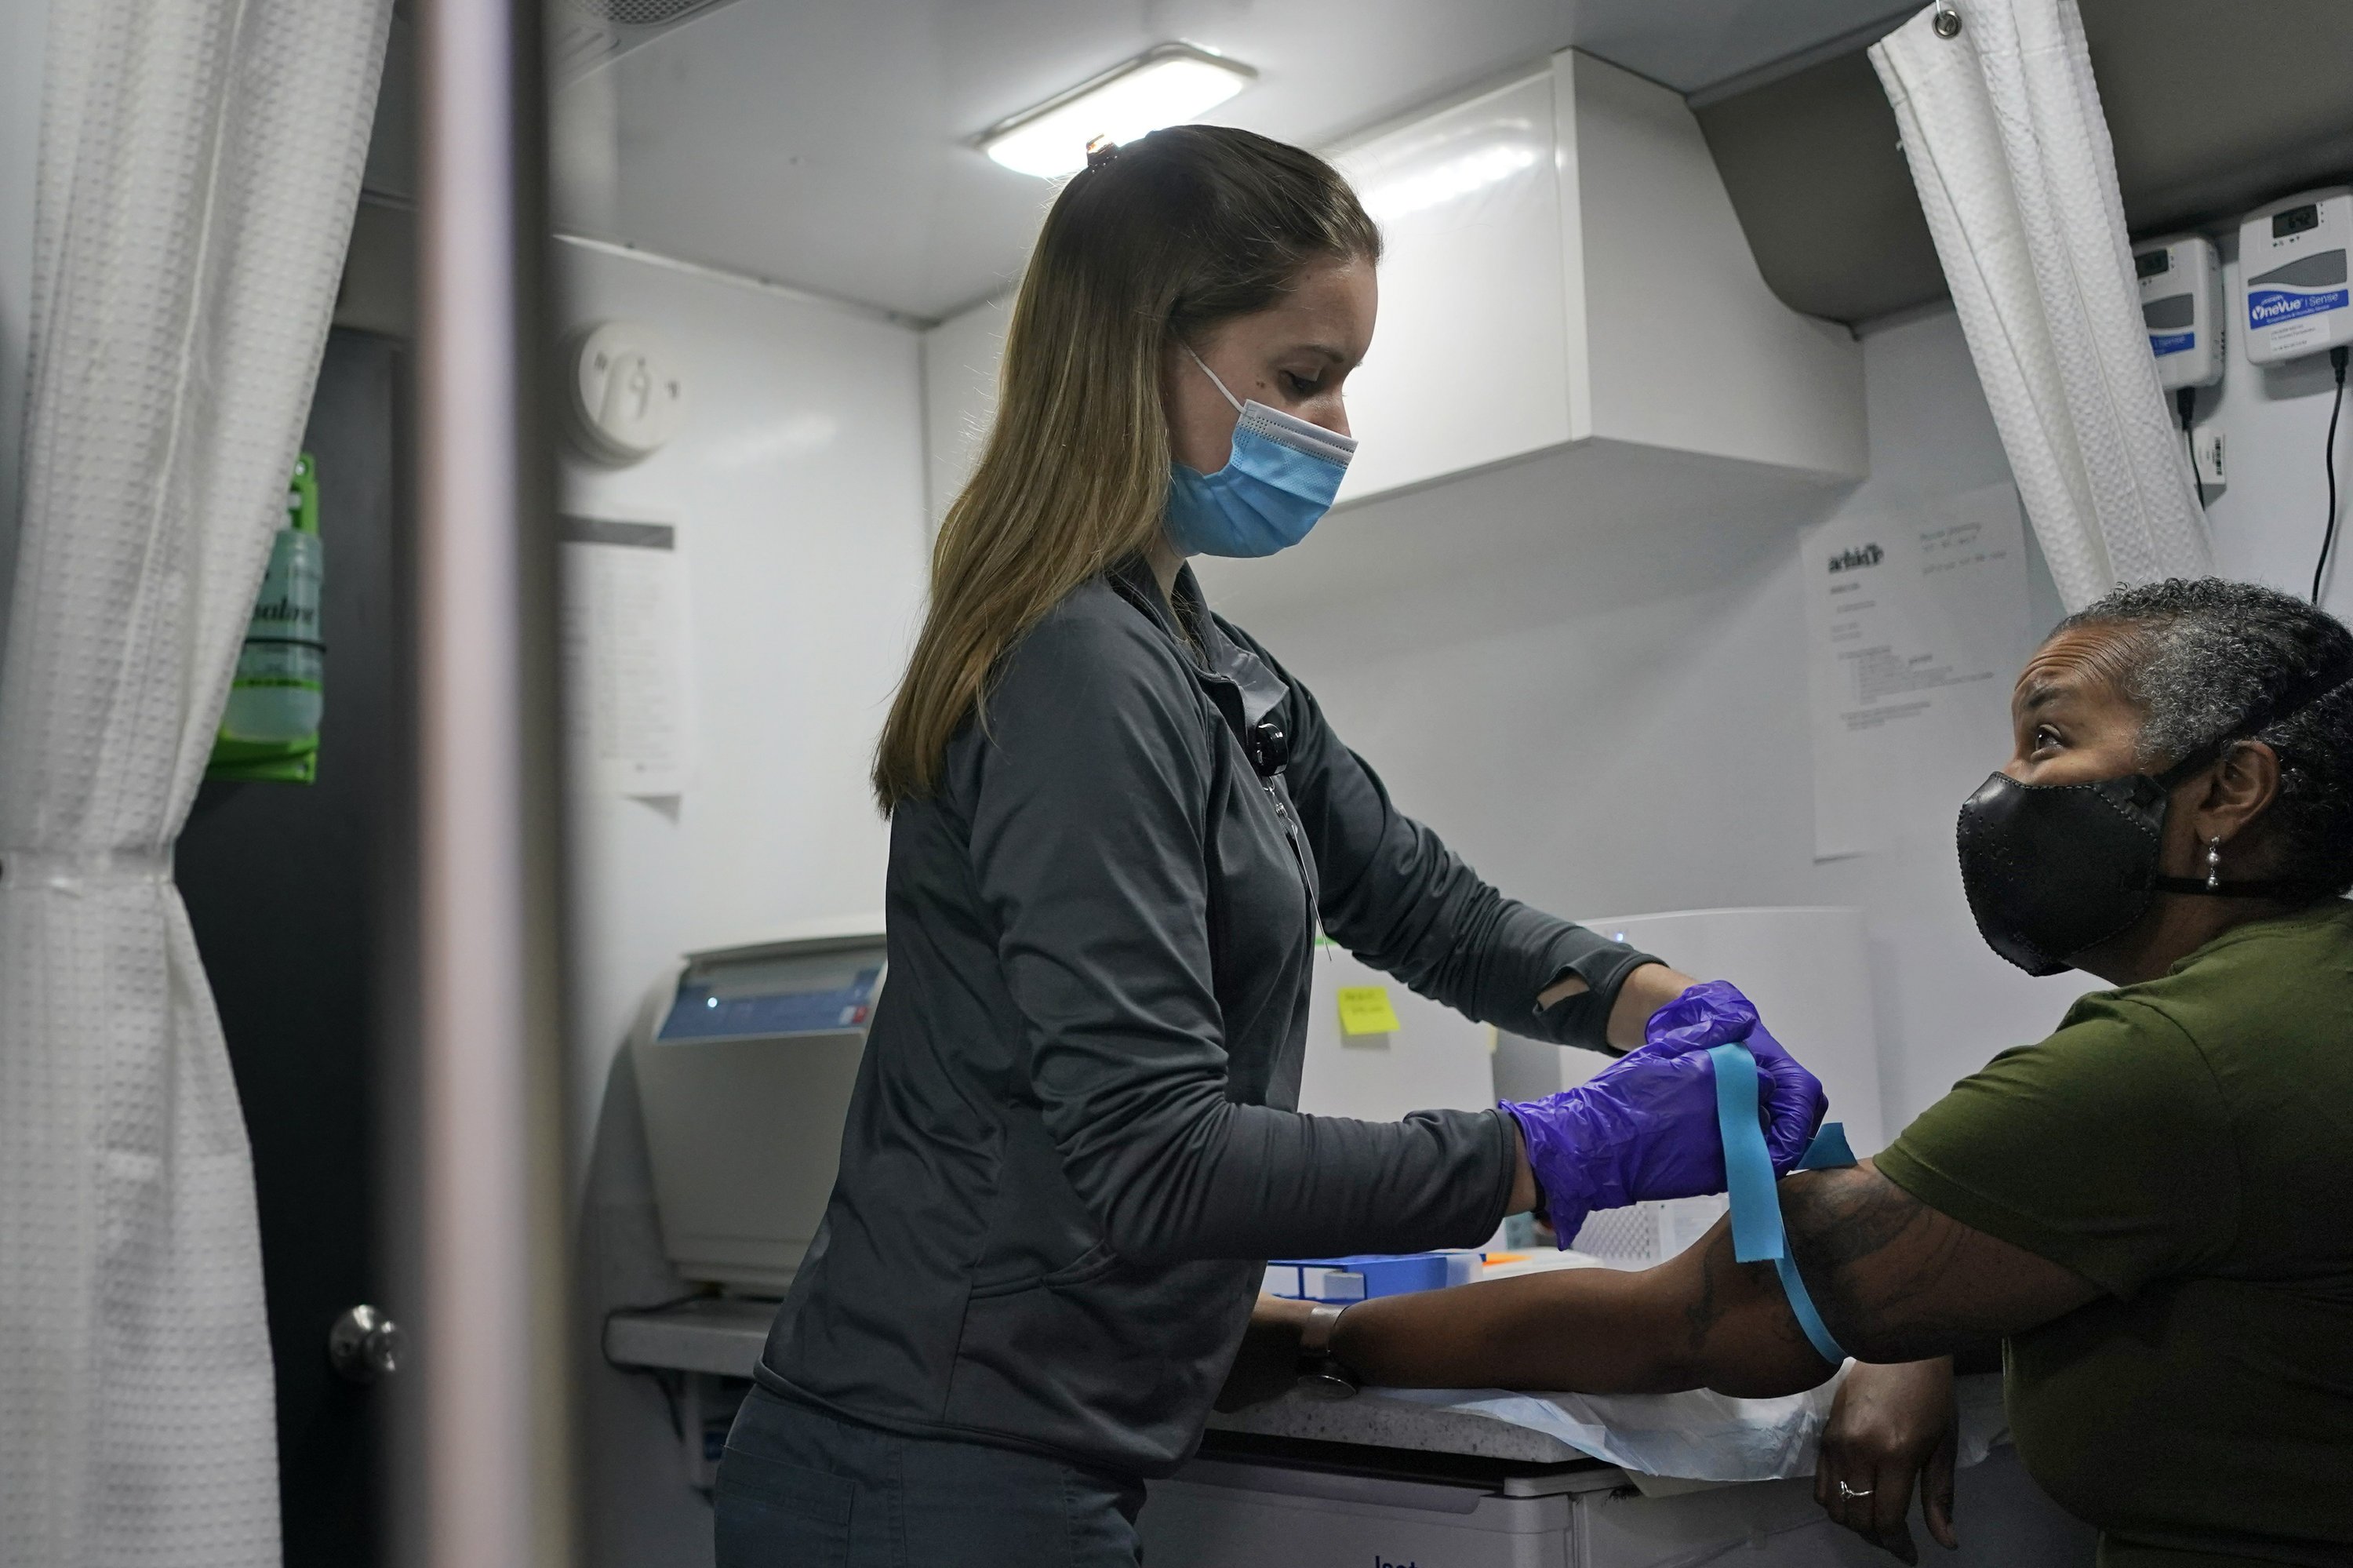 Mobile laboratories take vaccination studies to different neighborhoods